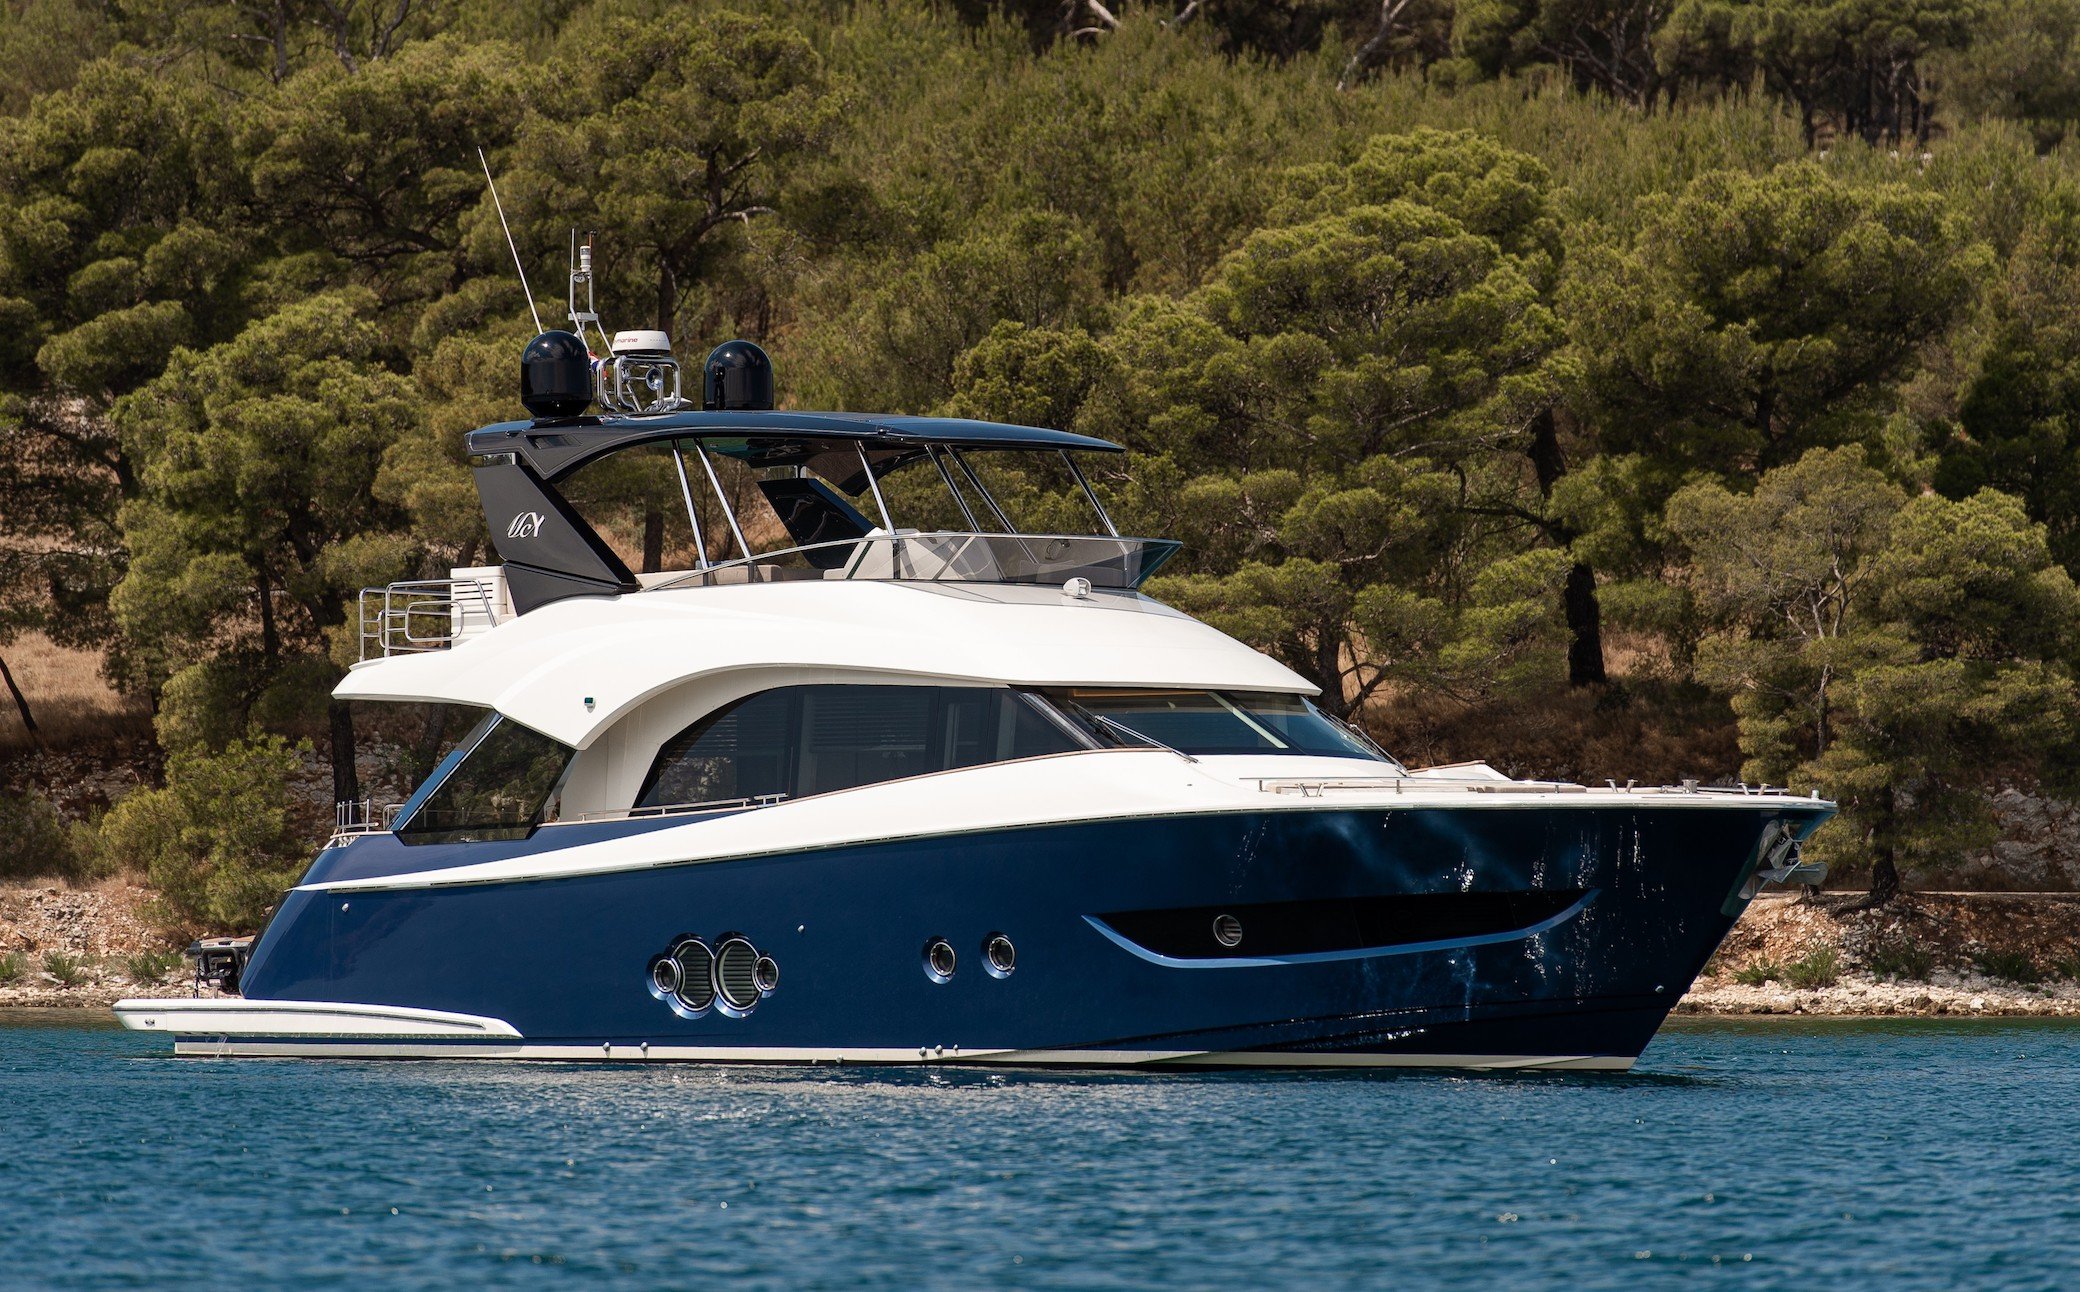 Luxury Motoryacht for bareboat charter in Croatia